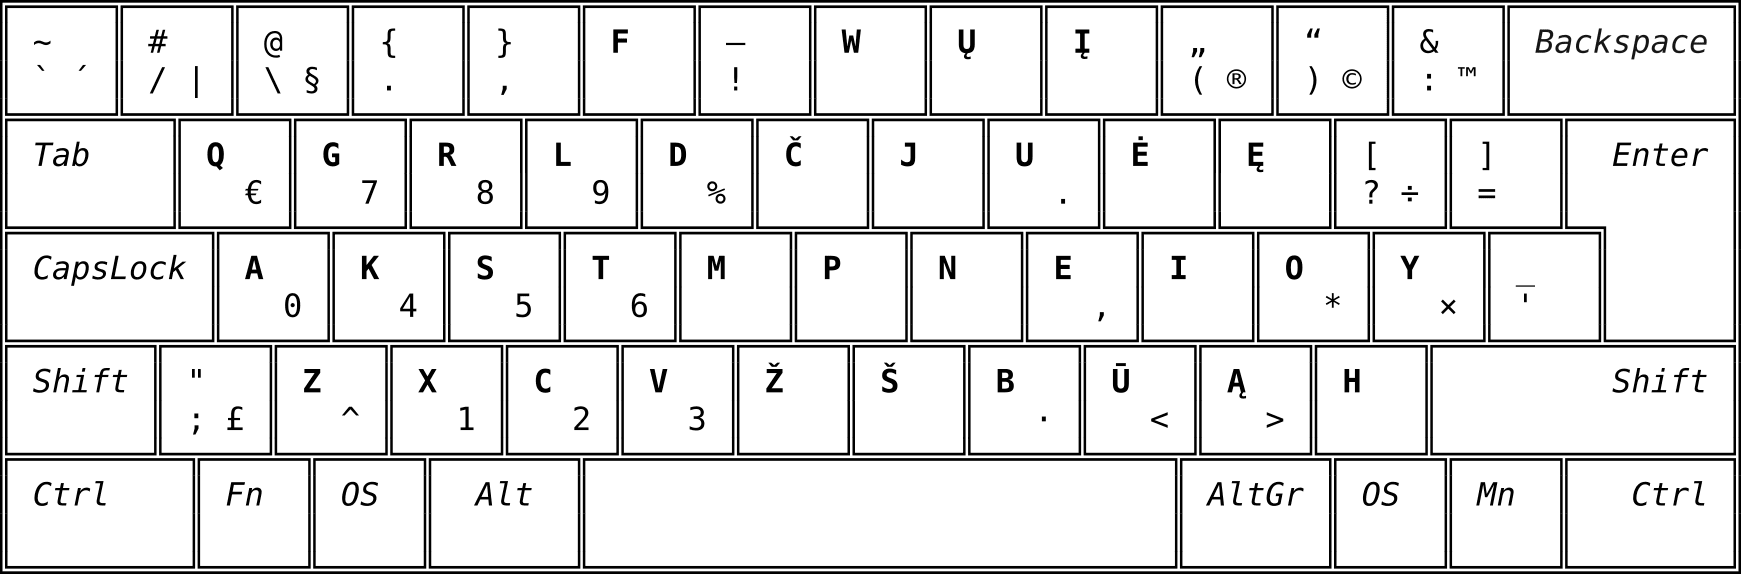 Lietuviškas klaviatūros išdėstymas LEKP QGRLDČ ISO